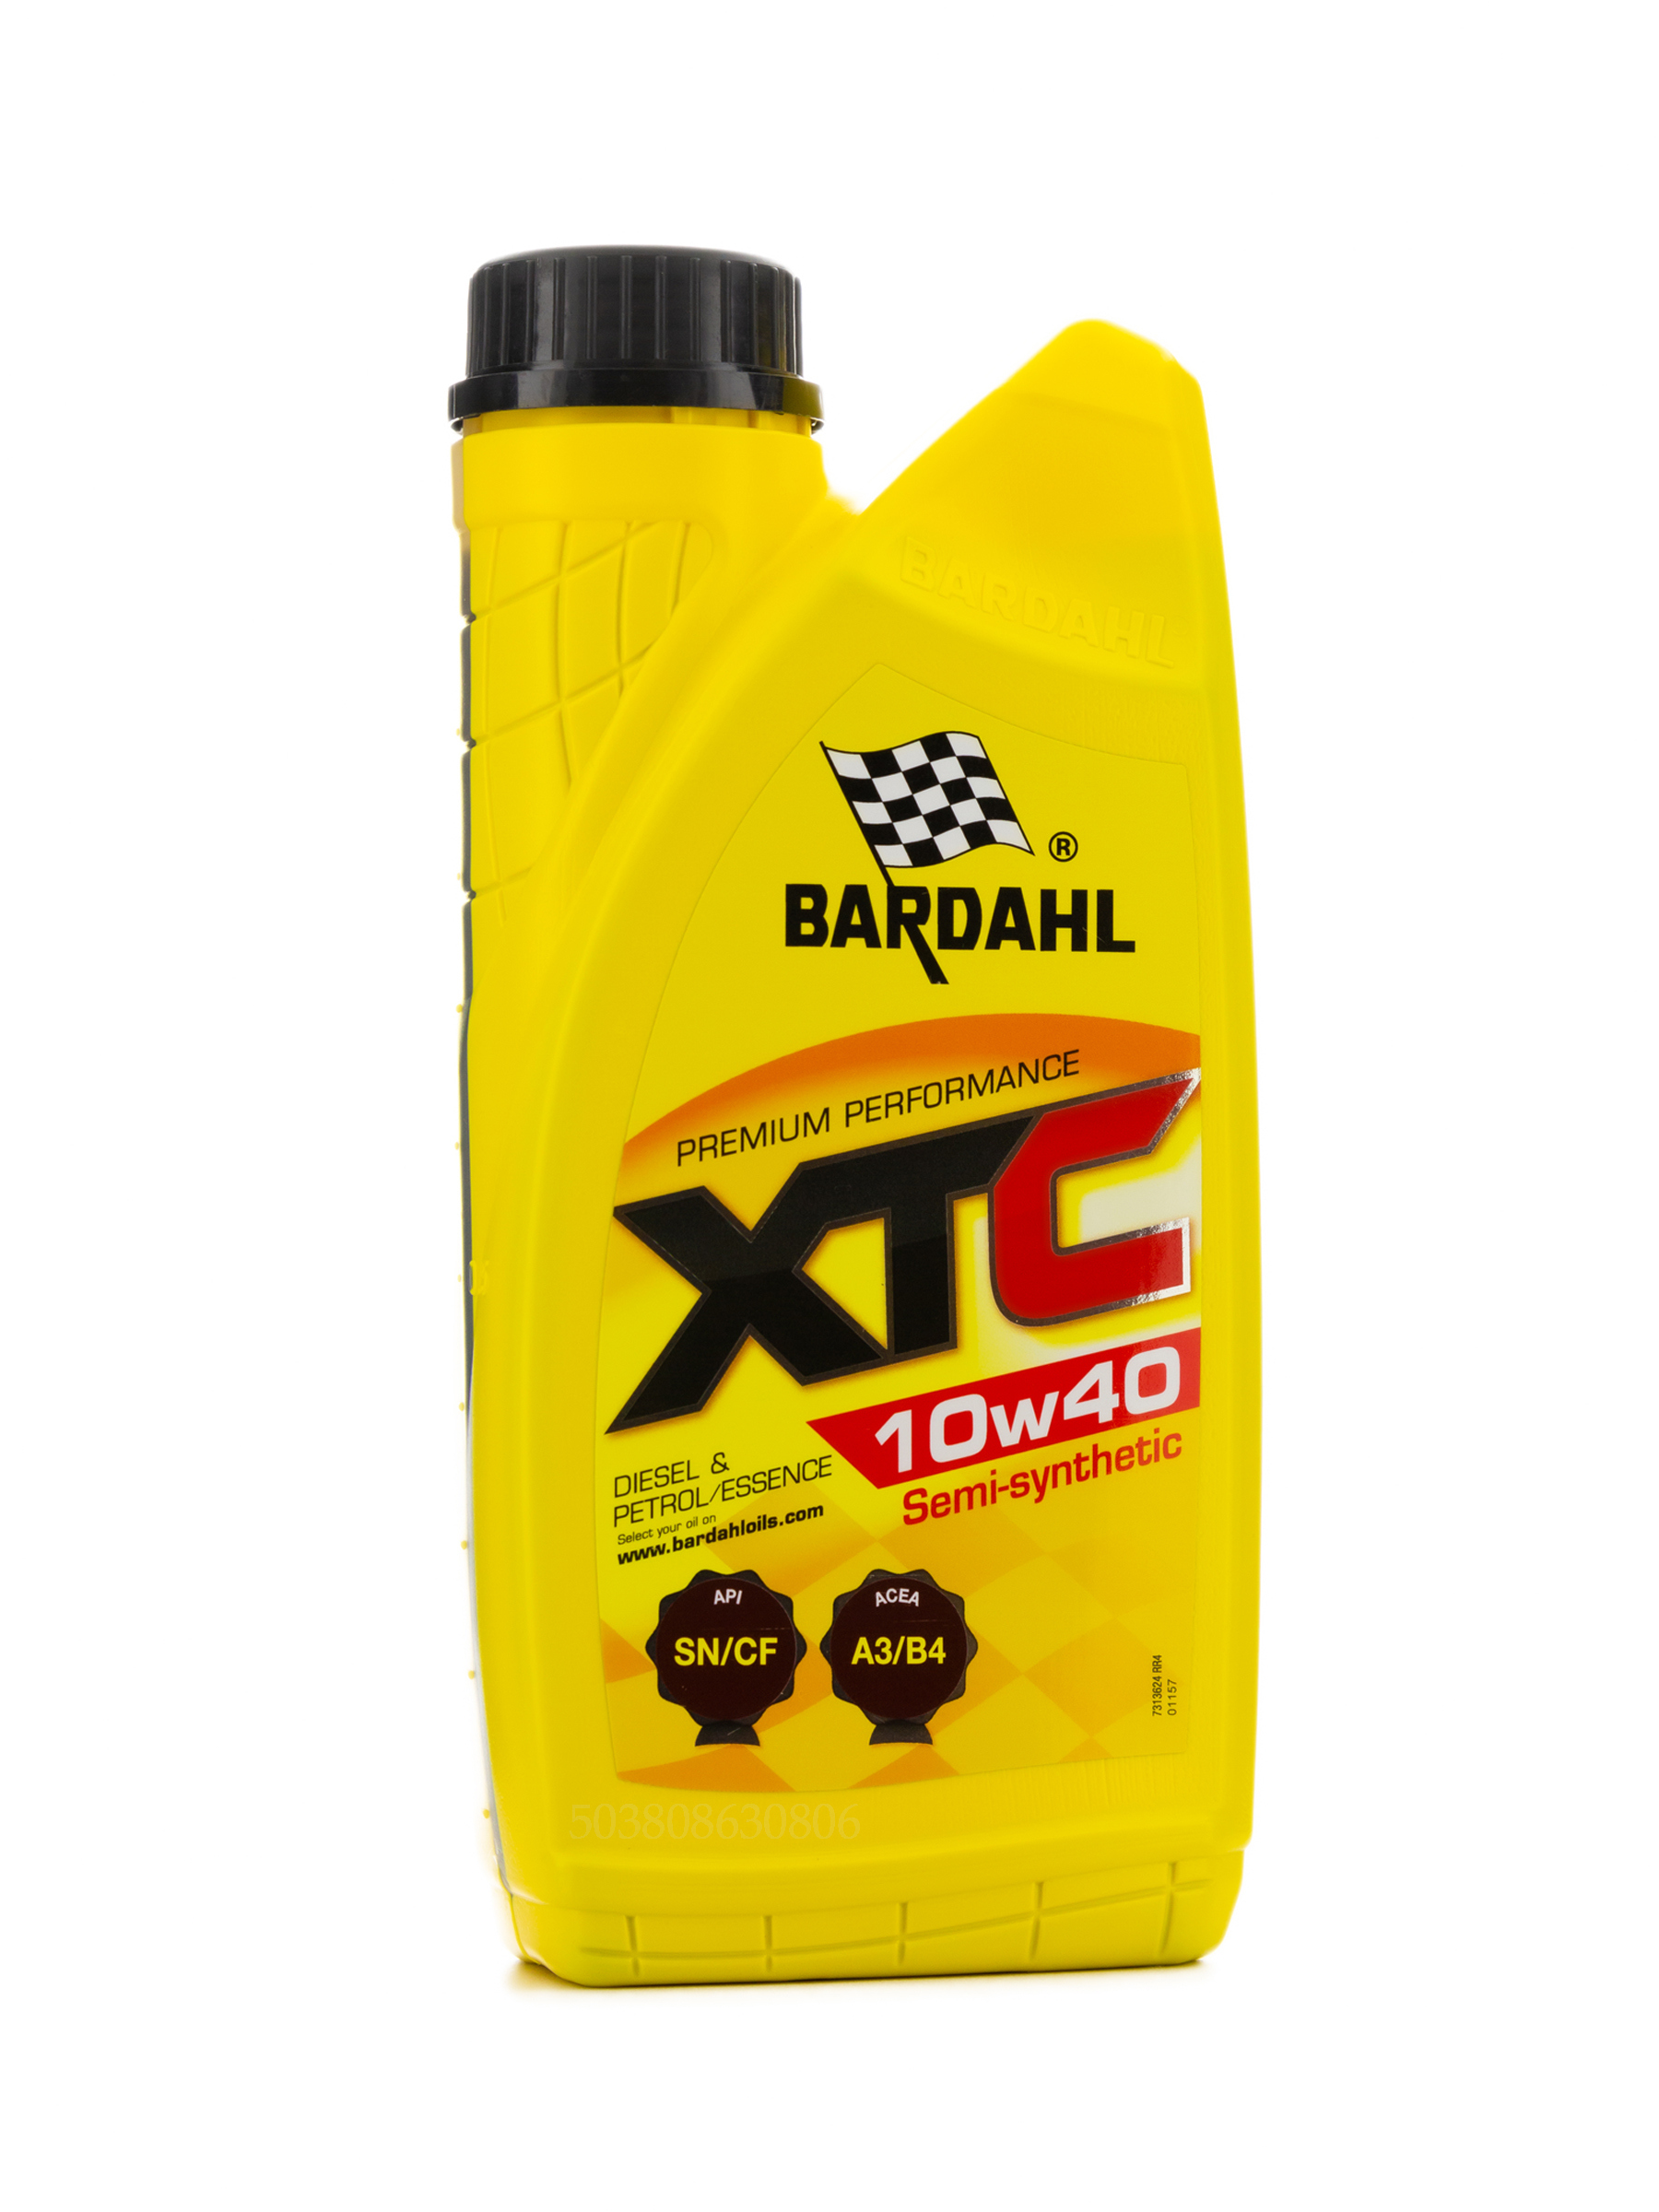 XTC 10W40 BARDAHL  Официальный сайт Bardahl (Бардаль)